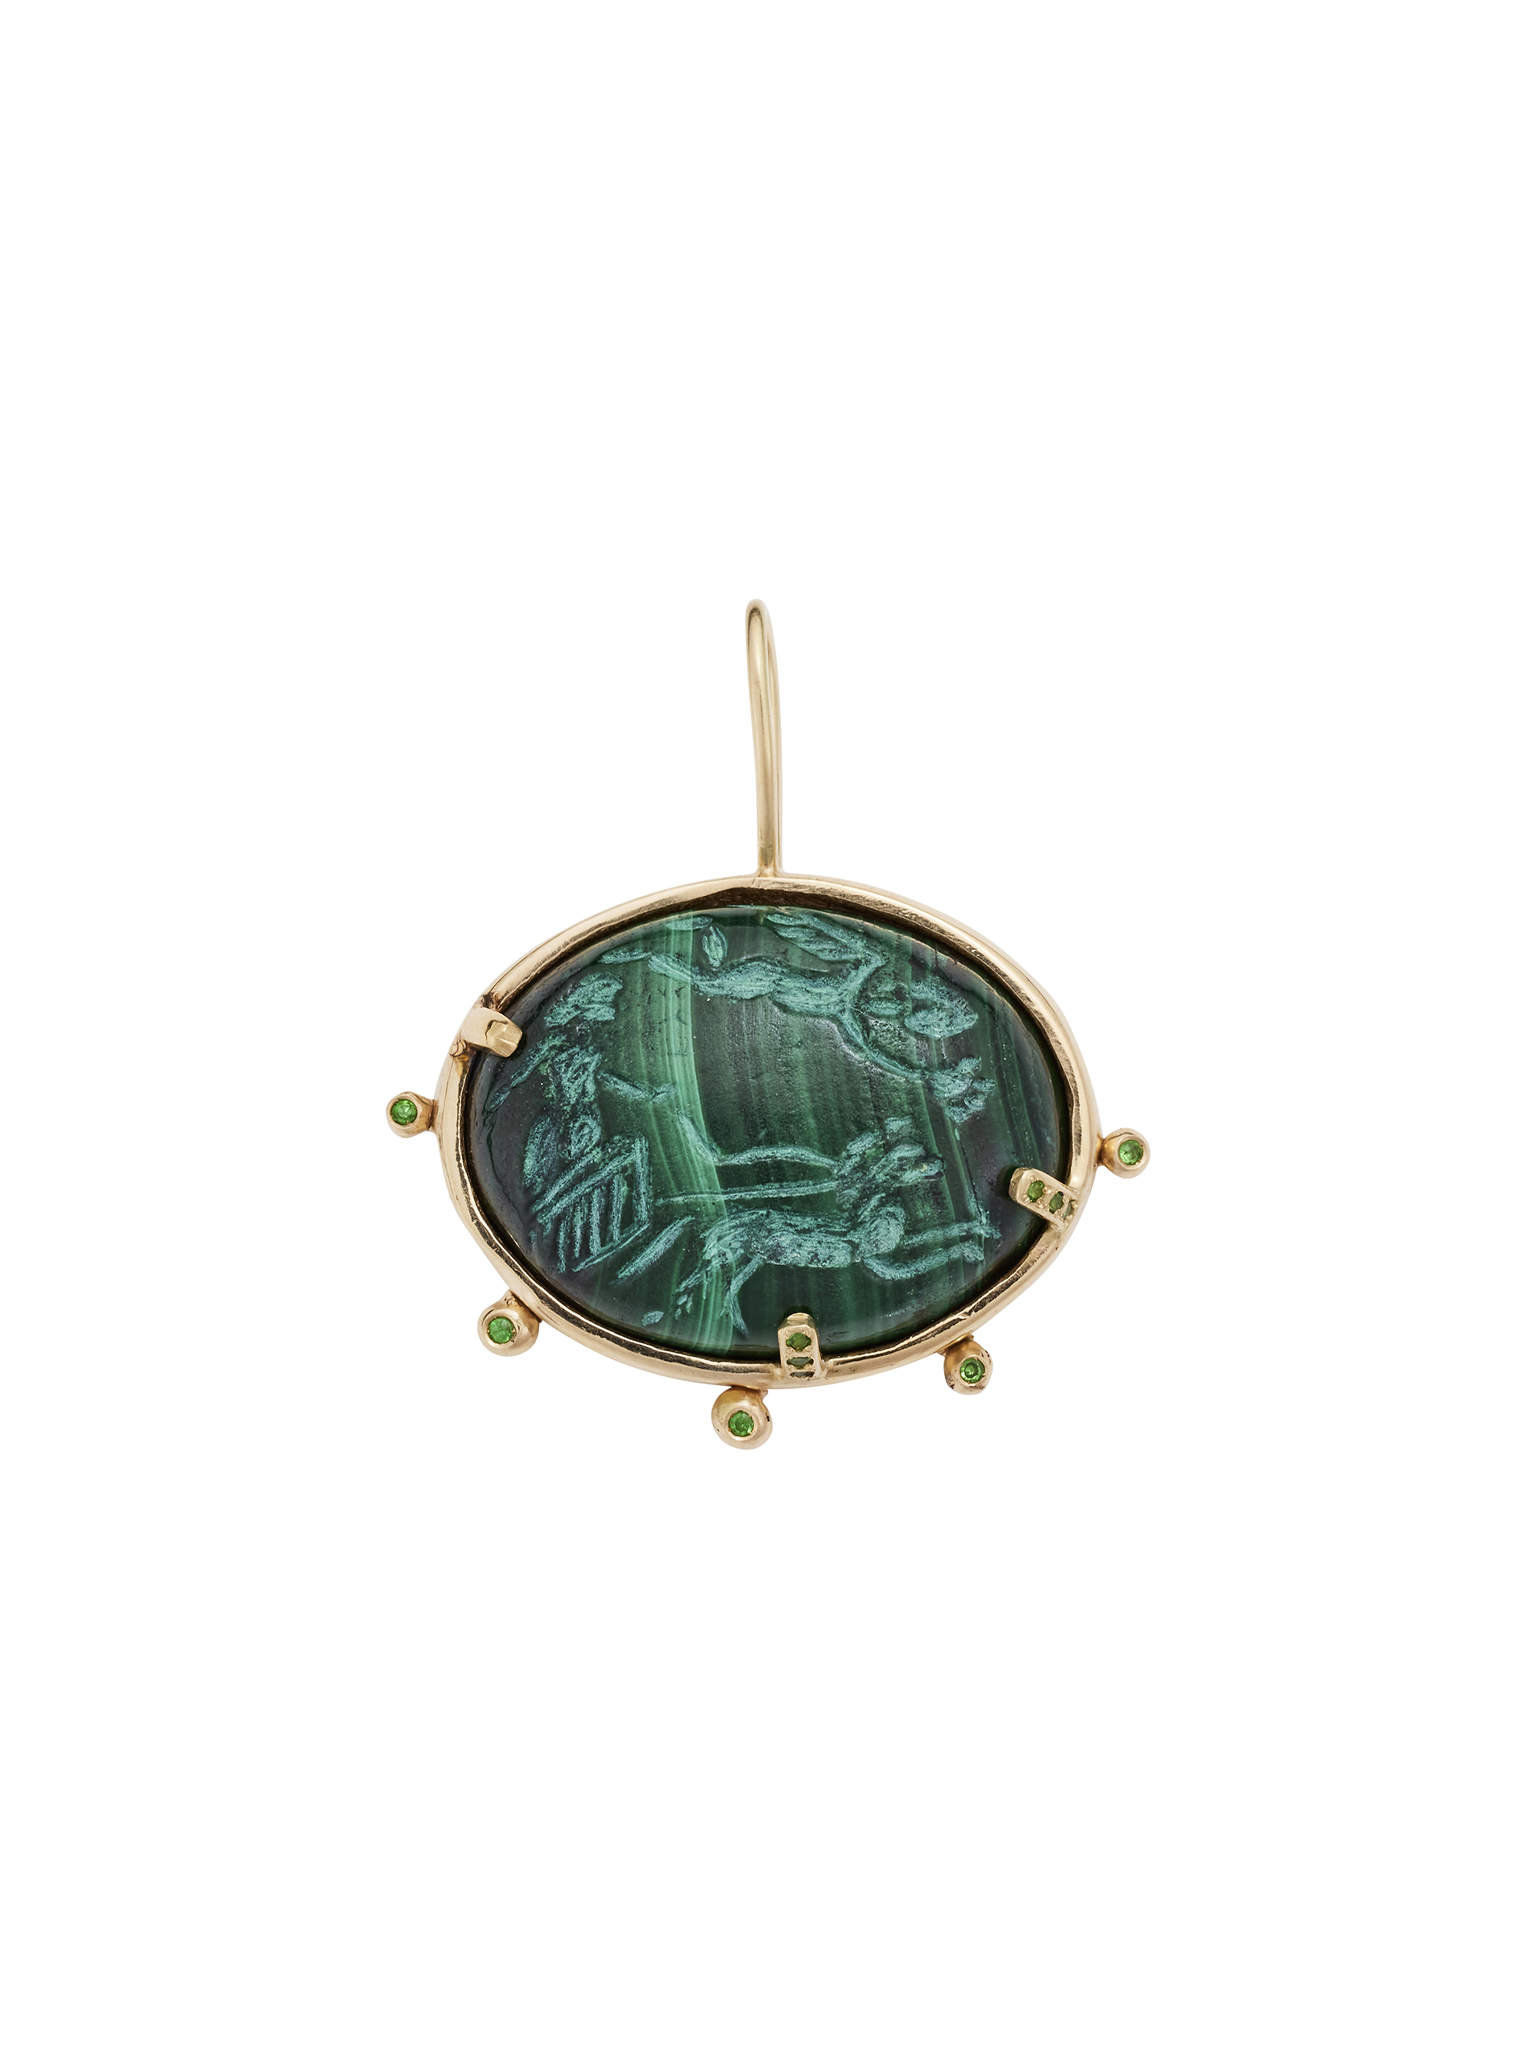 Hippolyta pendant with tsavorite garnet - 14k solid gold